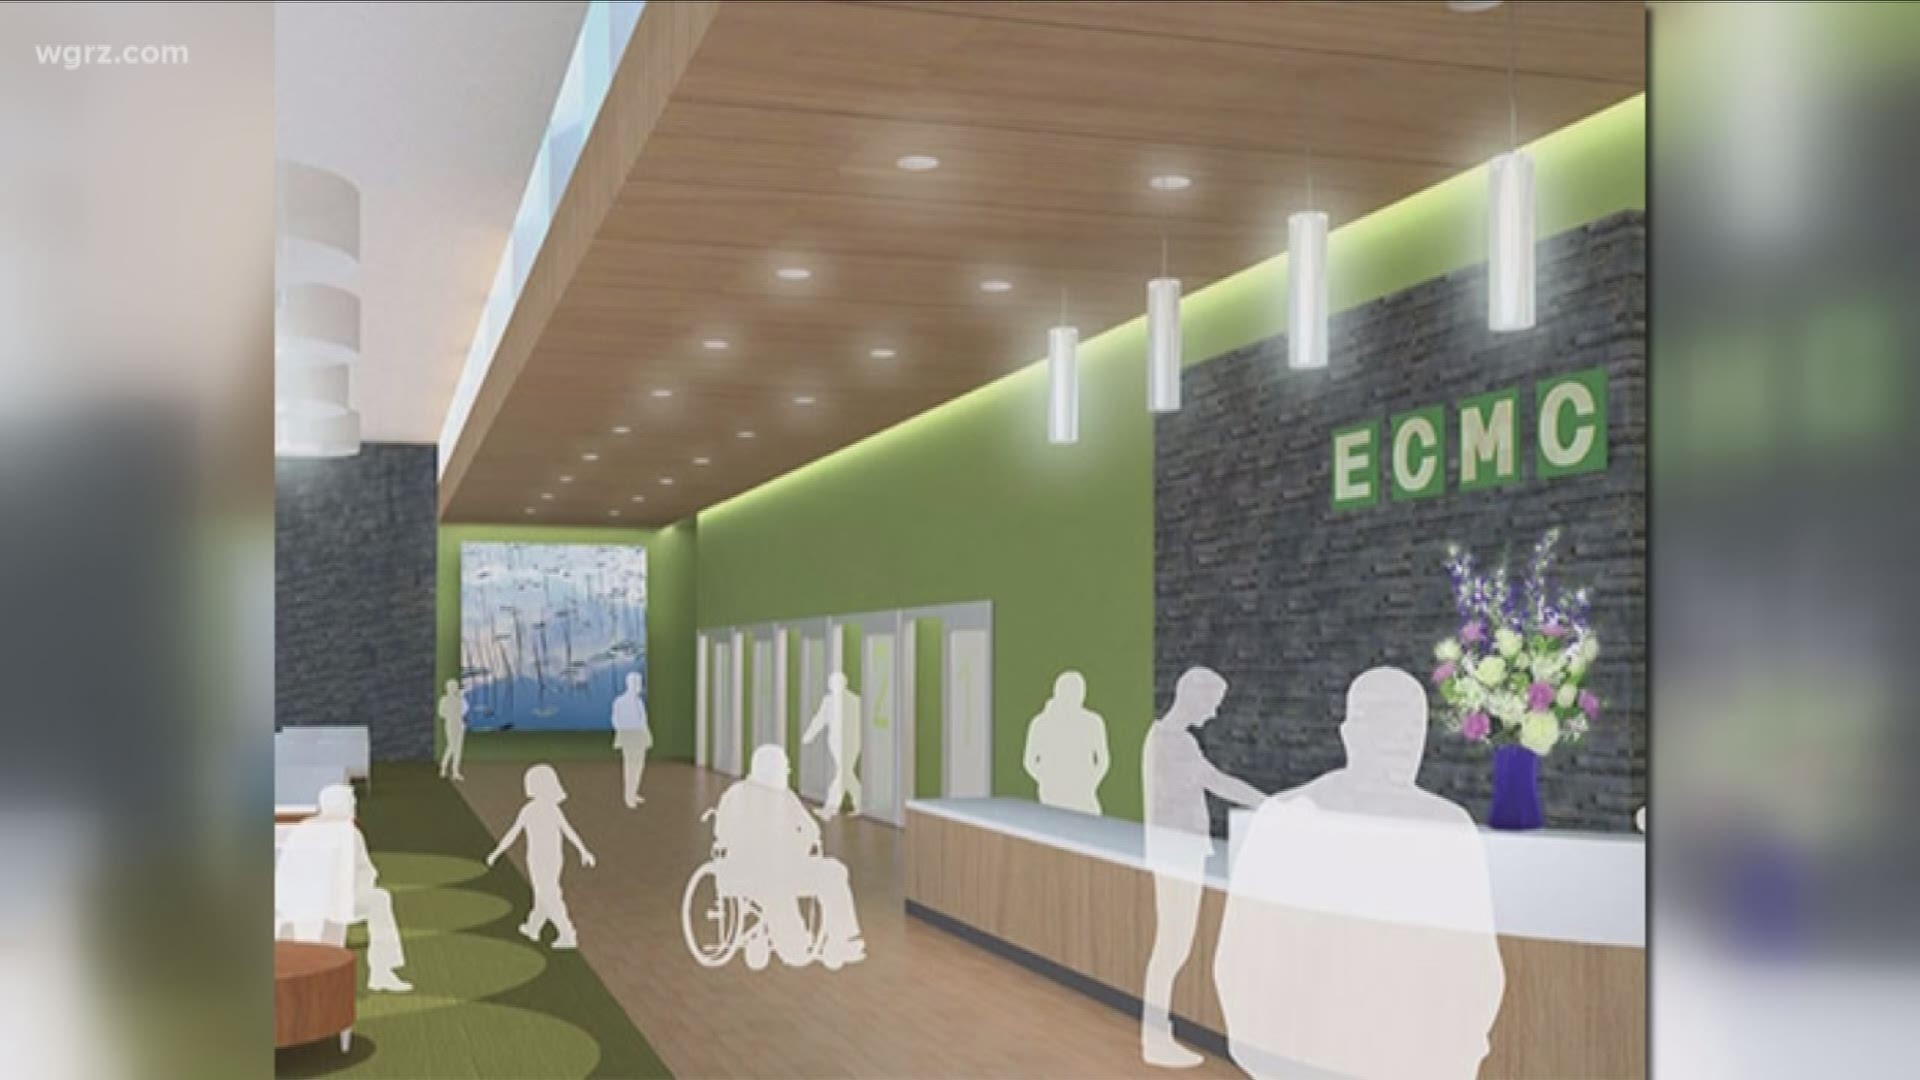 ECMC breaks ground on new $58M expansion